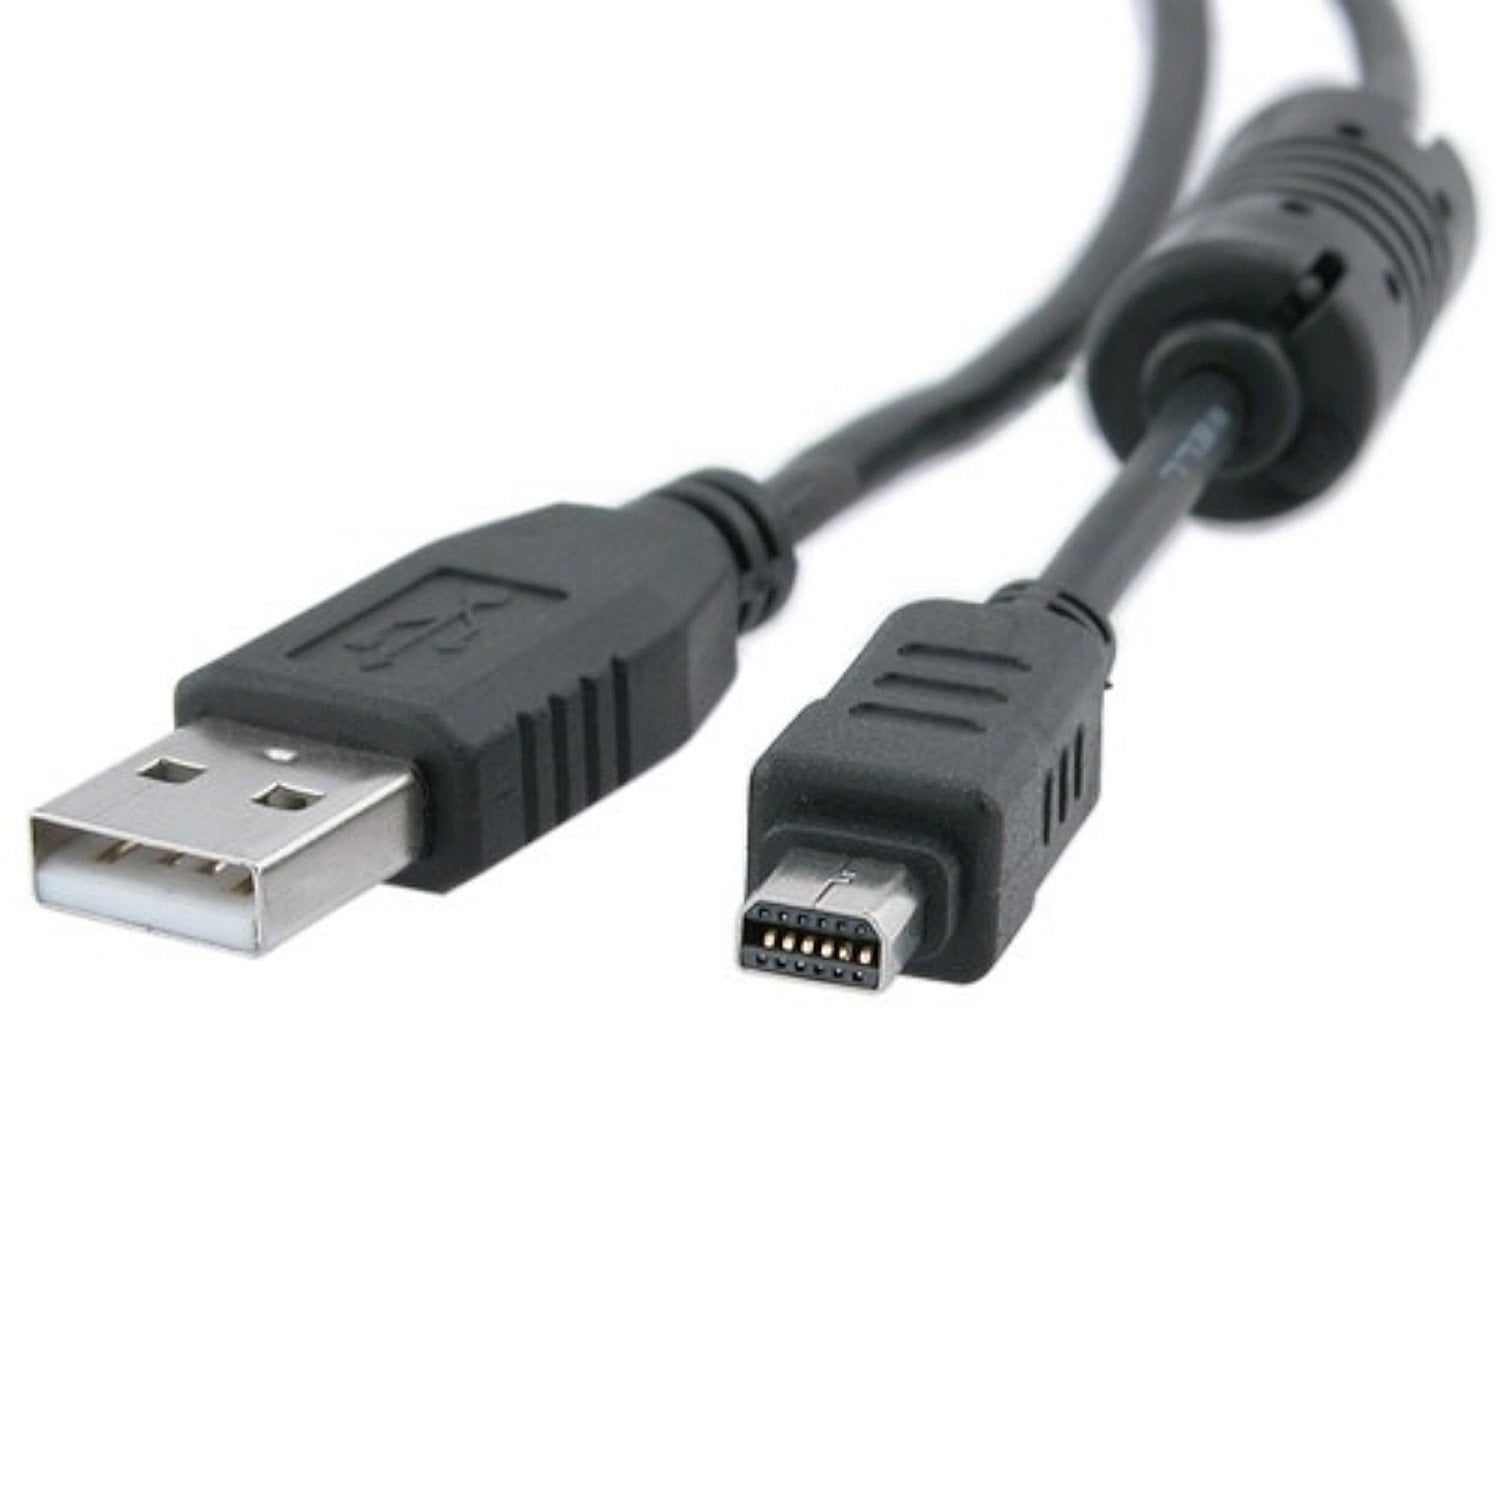 USB Datenkabel für Olympus mju 700 